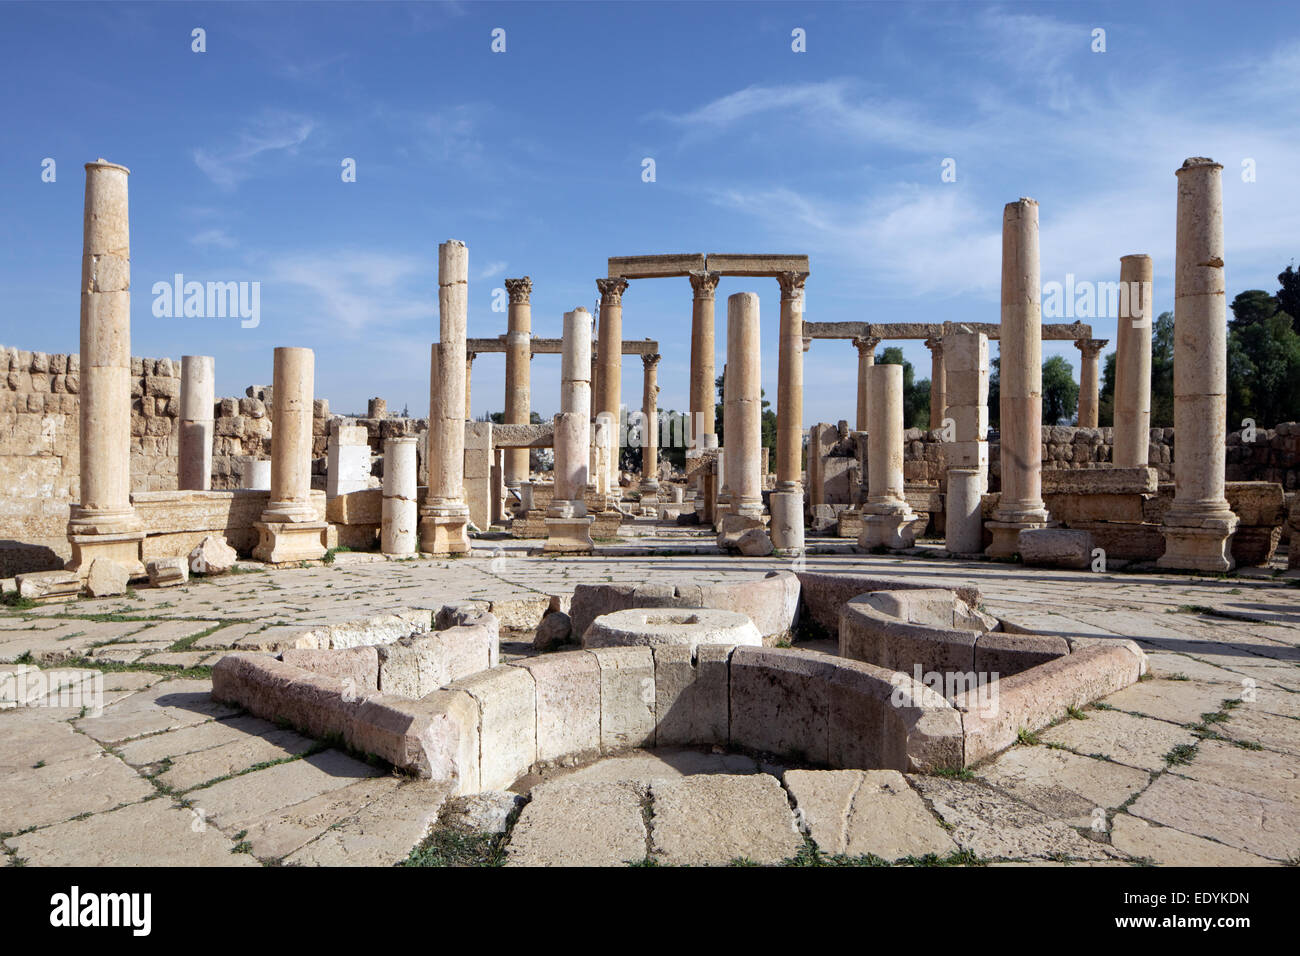 Food market, Marcellum, ancient Roman city of Jerash, part of the Decapolis, Jerash, Jerash Governorate, Jordan Stock Photo